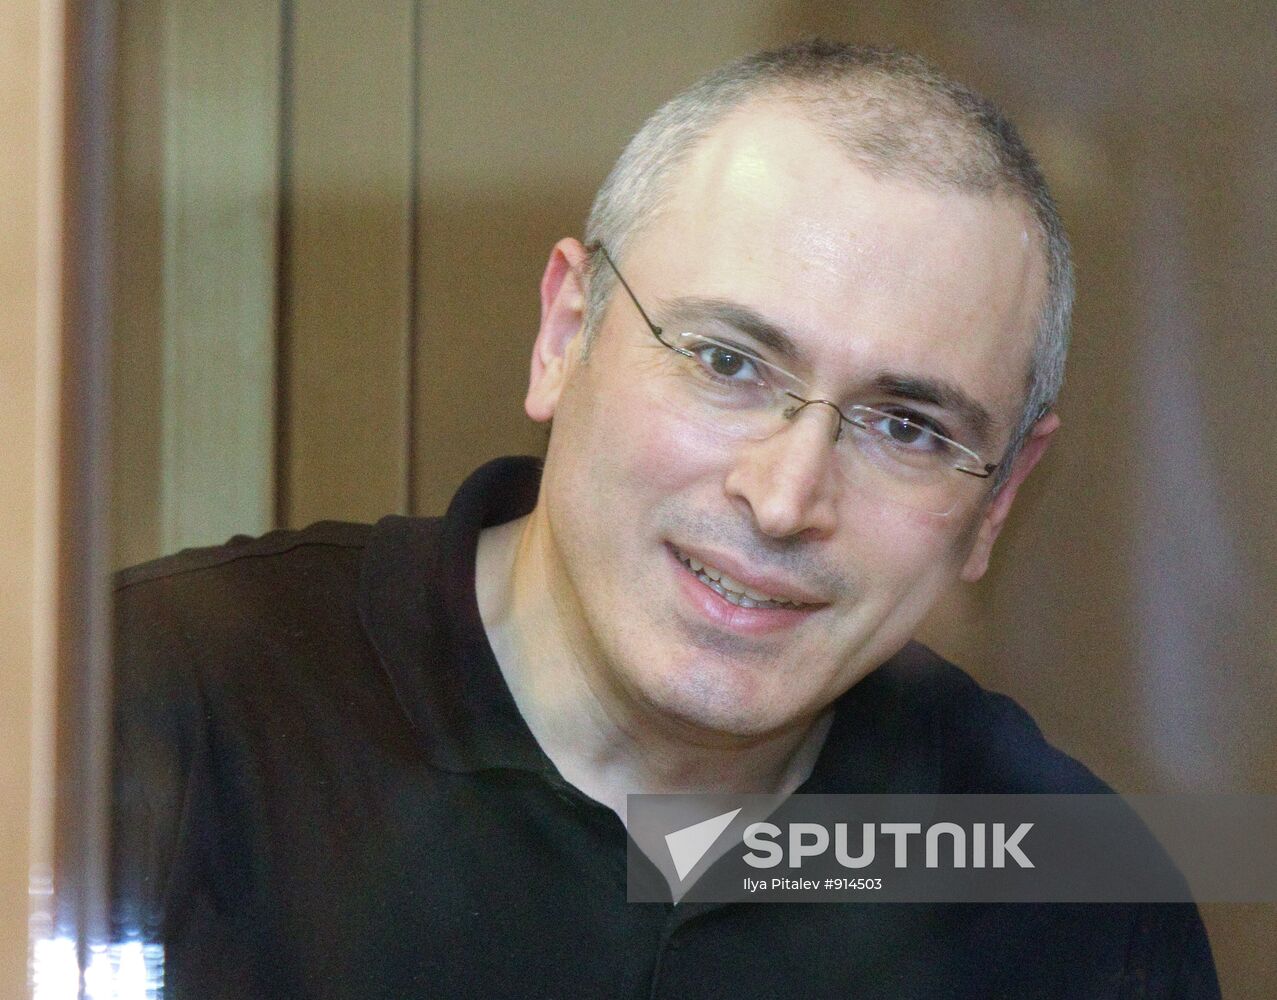 Mikhail khodorkovsky